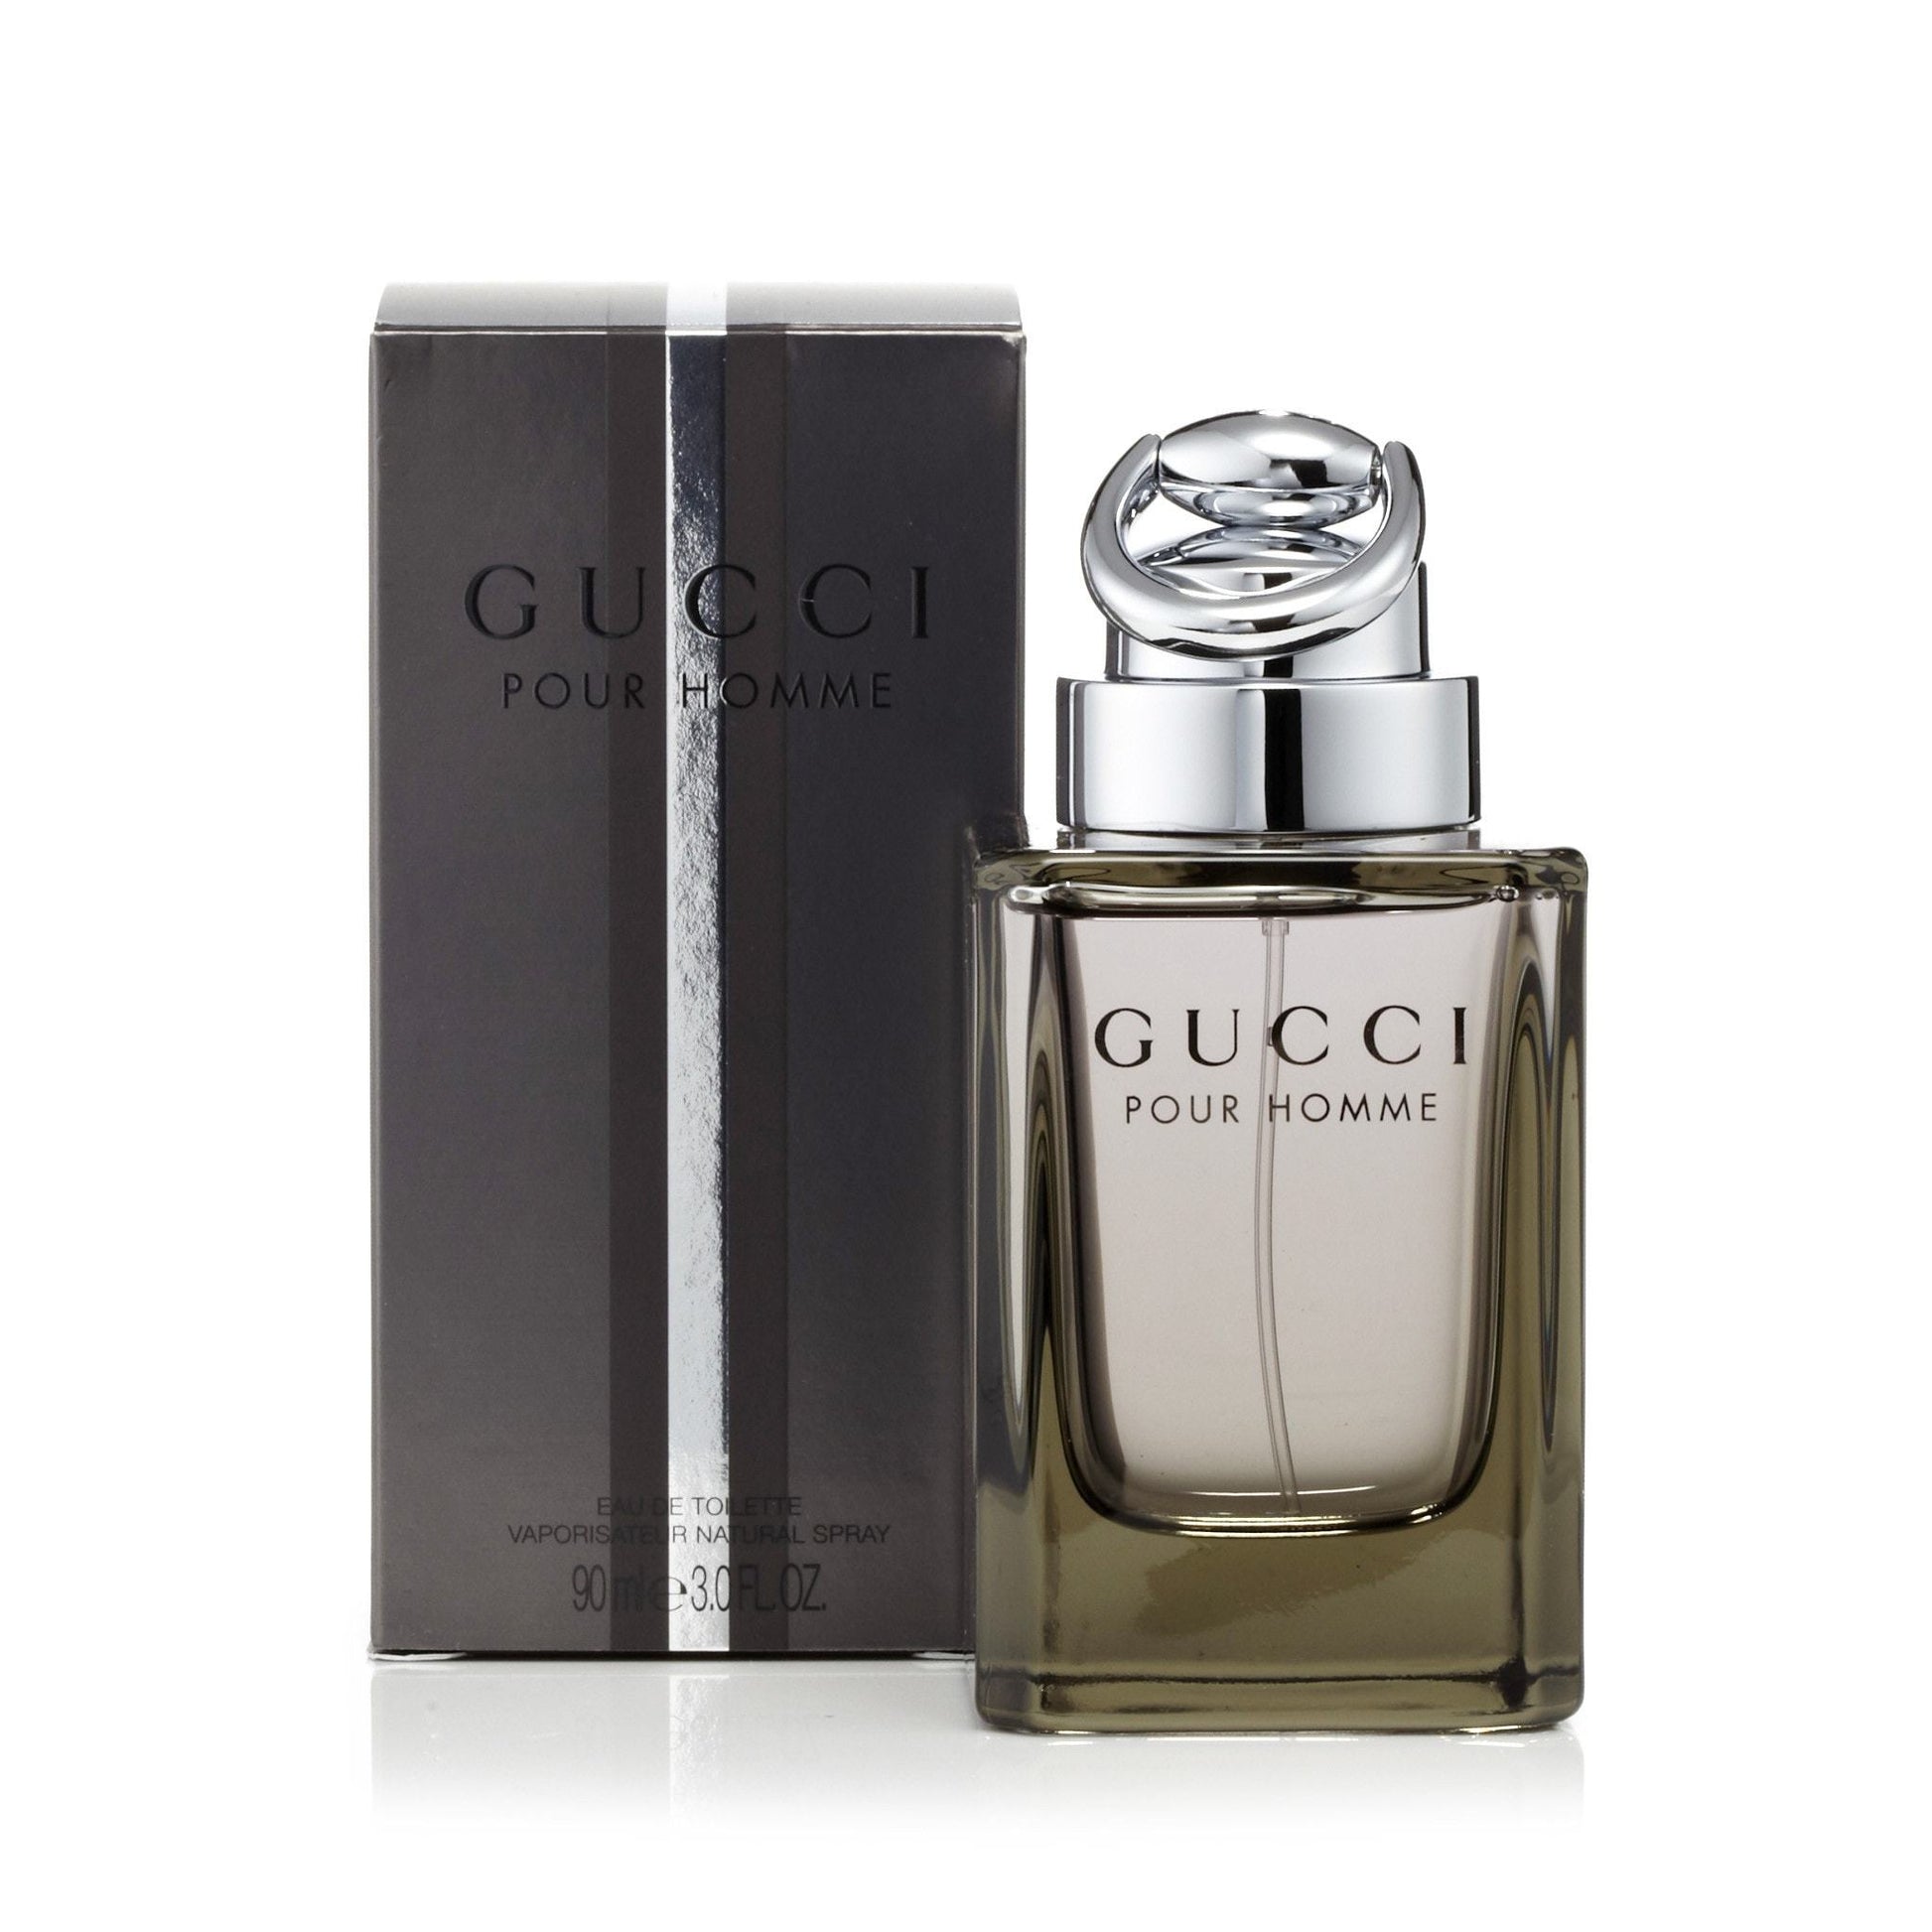 Gucci by Gucci Eau de Toilette Spray for Men by Gucci, Product image 7